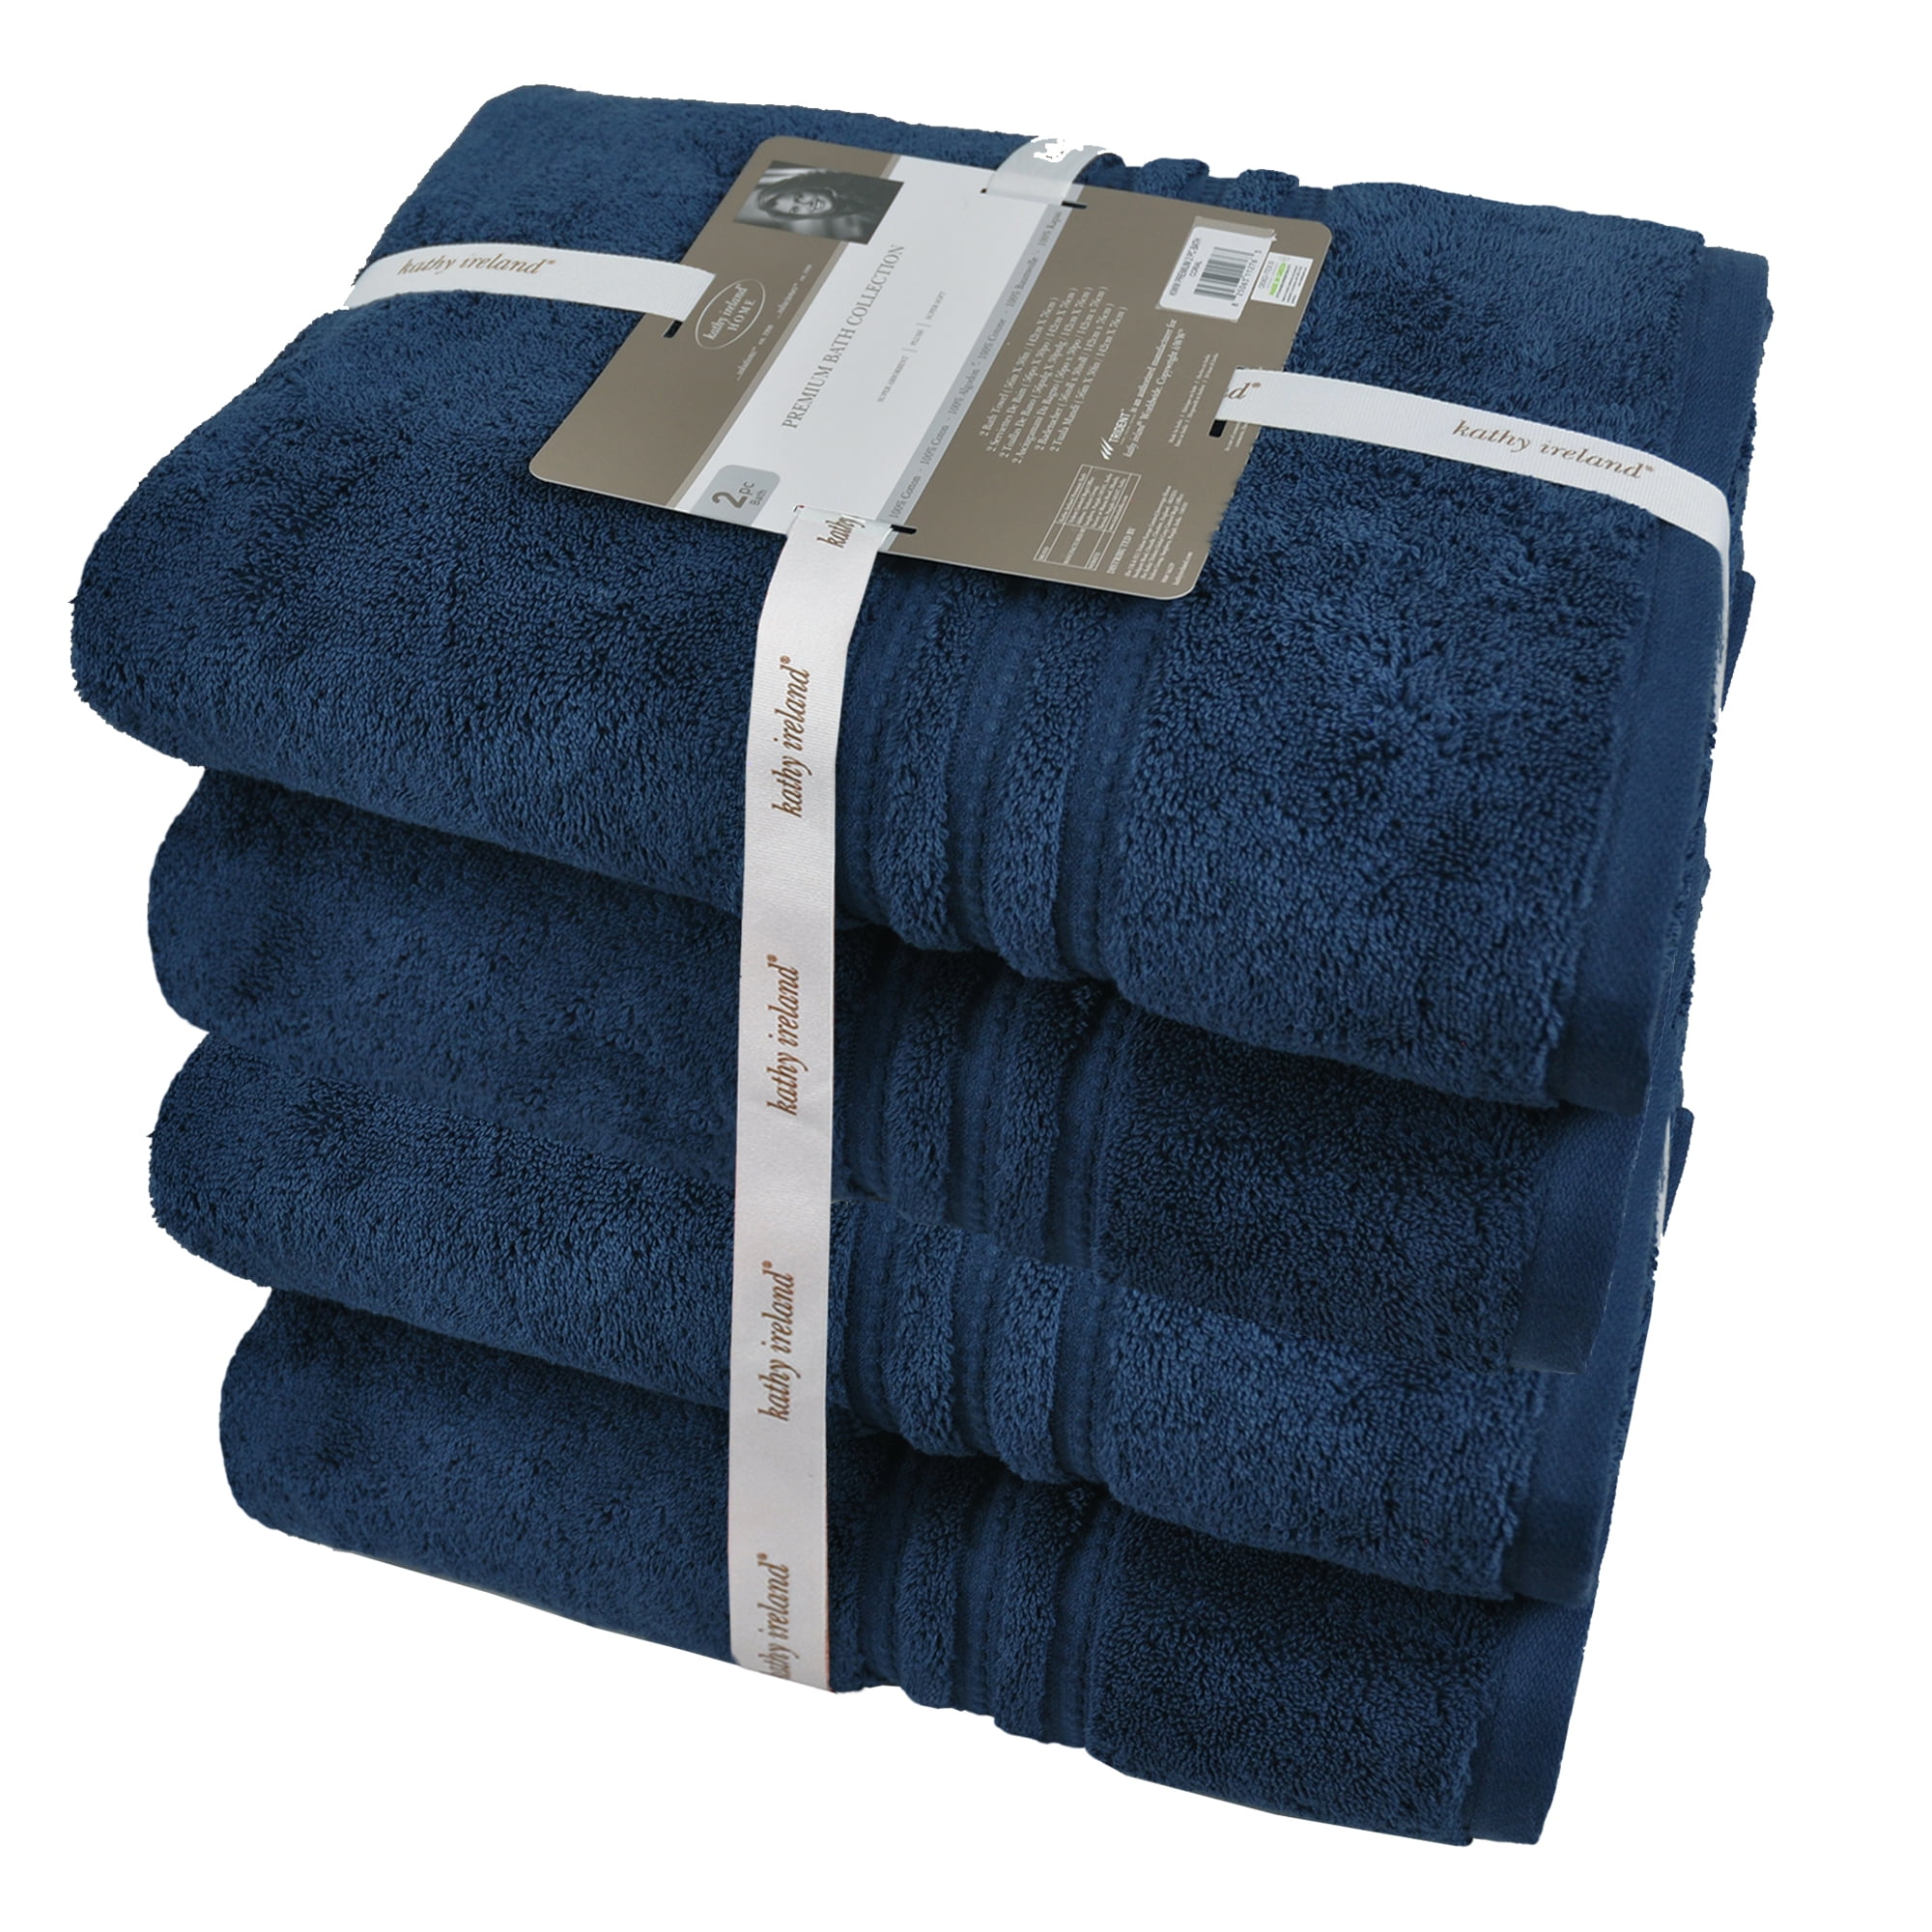 Blue Bath Towels for Bathroom, 4 Pack Bath Towel Set, Oeko-Tex Terry Cotton  Bathroom Towels, Soft and Absorbent Bathroom Towels Set, Bath Towel for